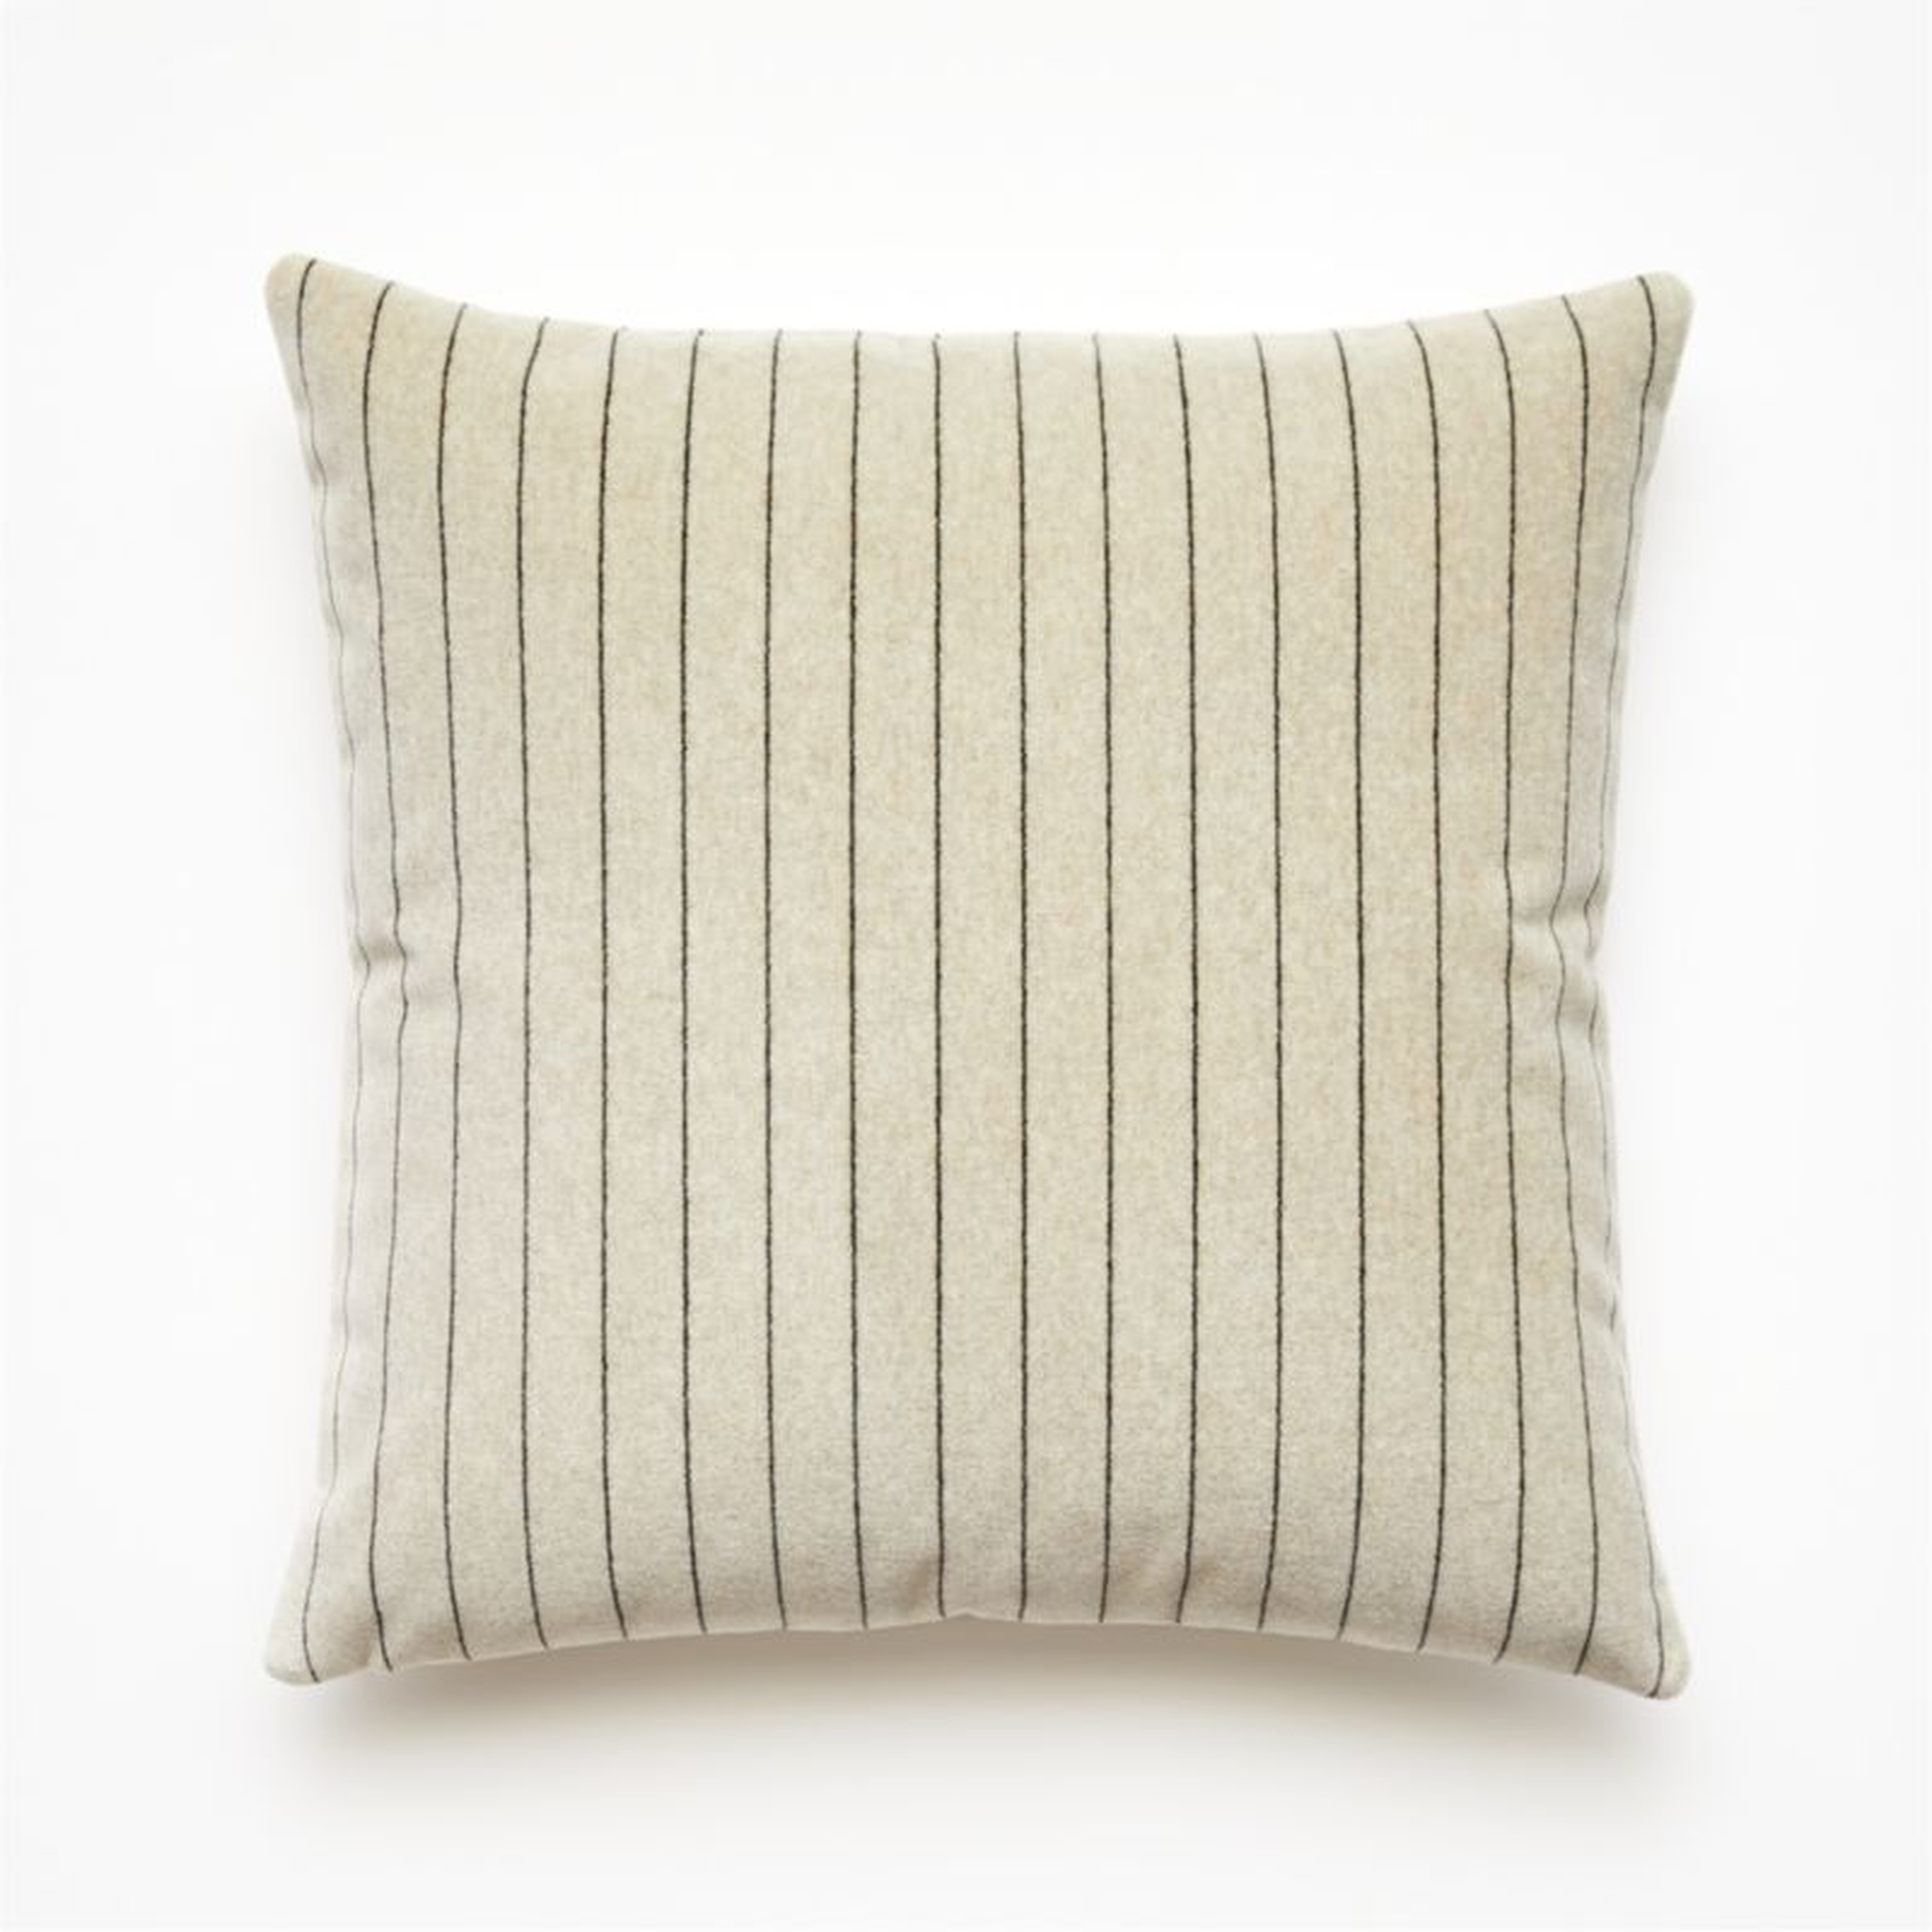 Boundary Pillow, Ivory, 18" x 18" - CB2